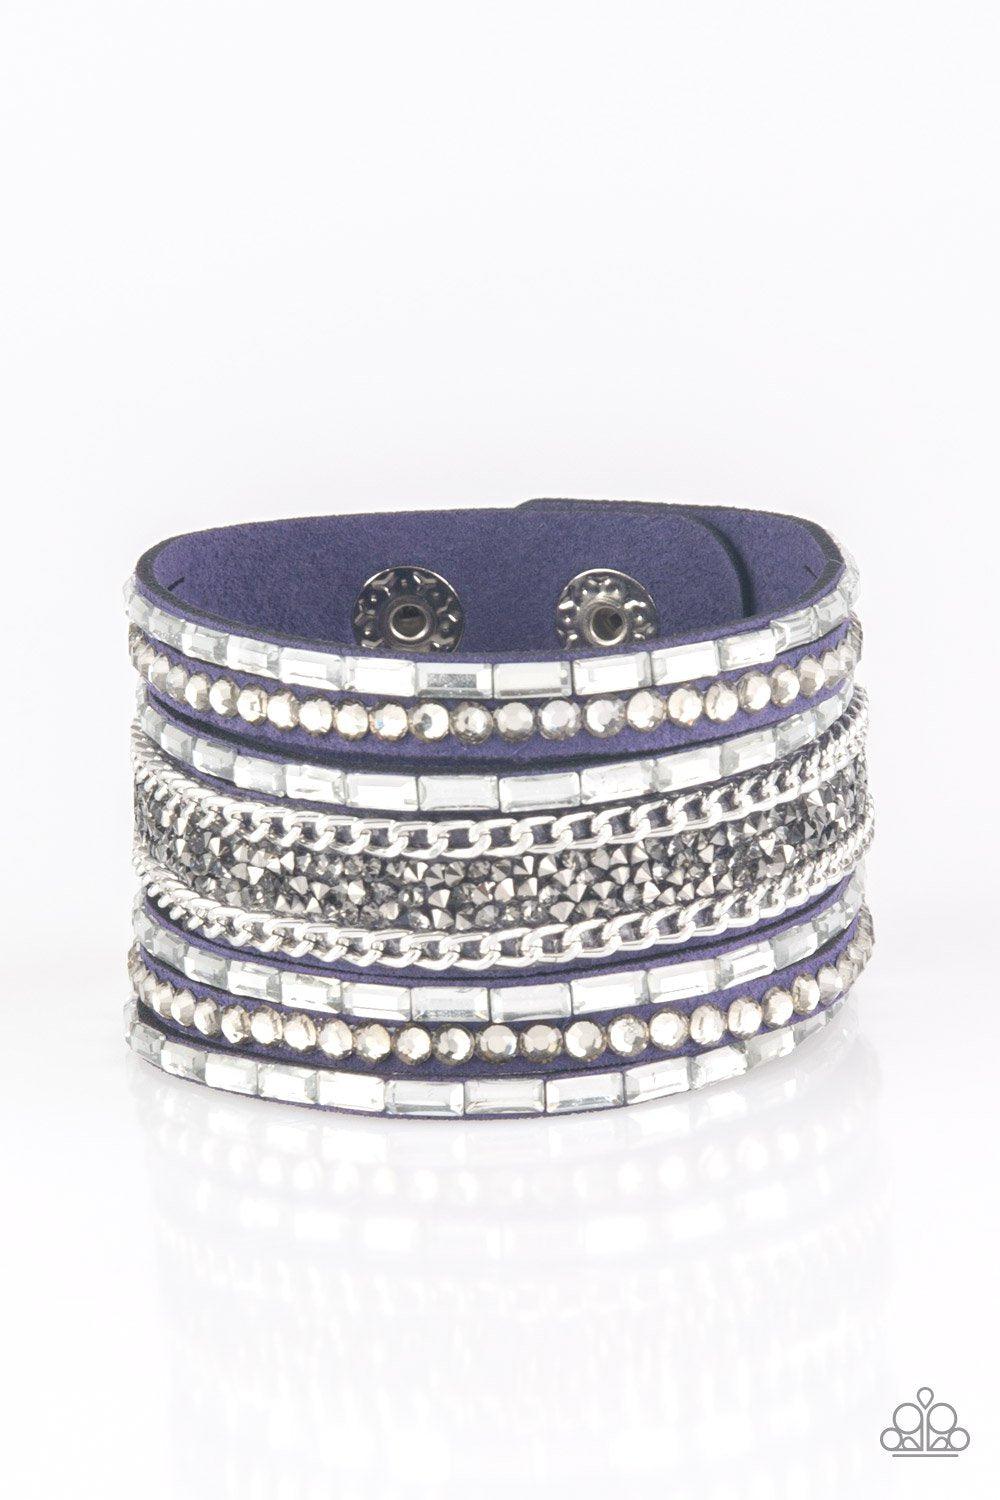 Rhinestone Rumble Blue Urban Wrap Snap Bracelet - Paparazzi Accessories - lightbox -CarasShop.com - $5 Jewelry by Cara Jewels